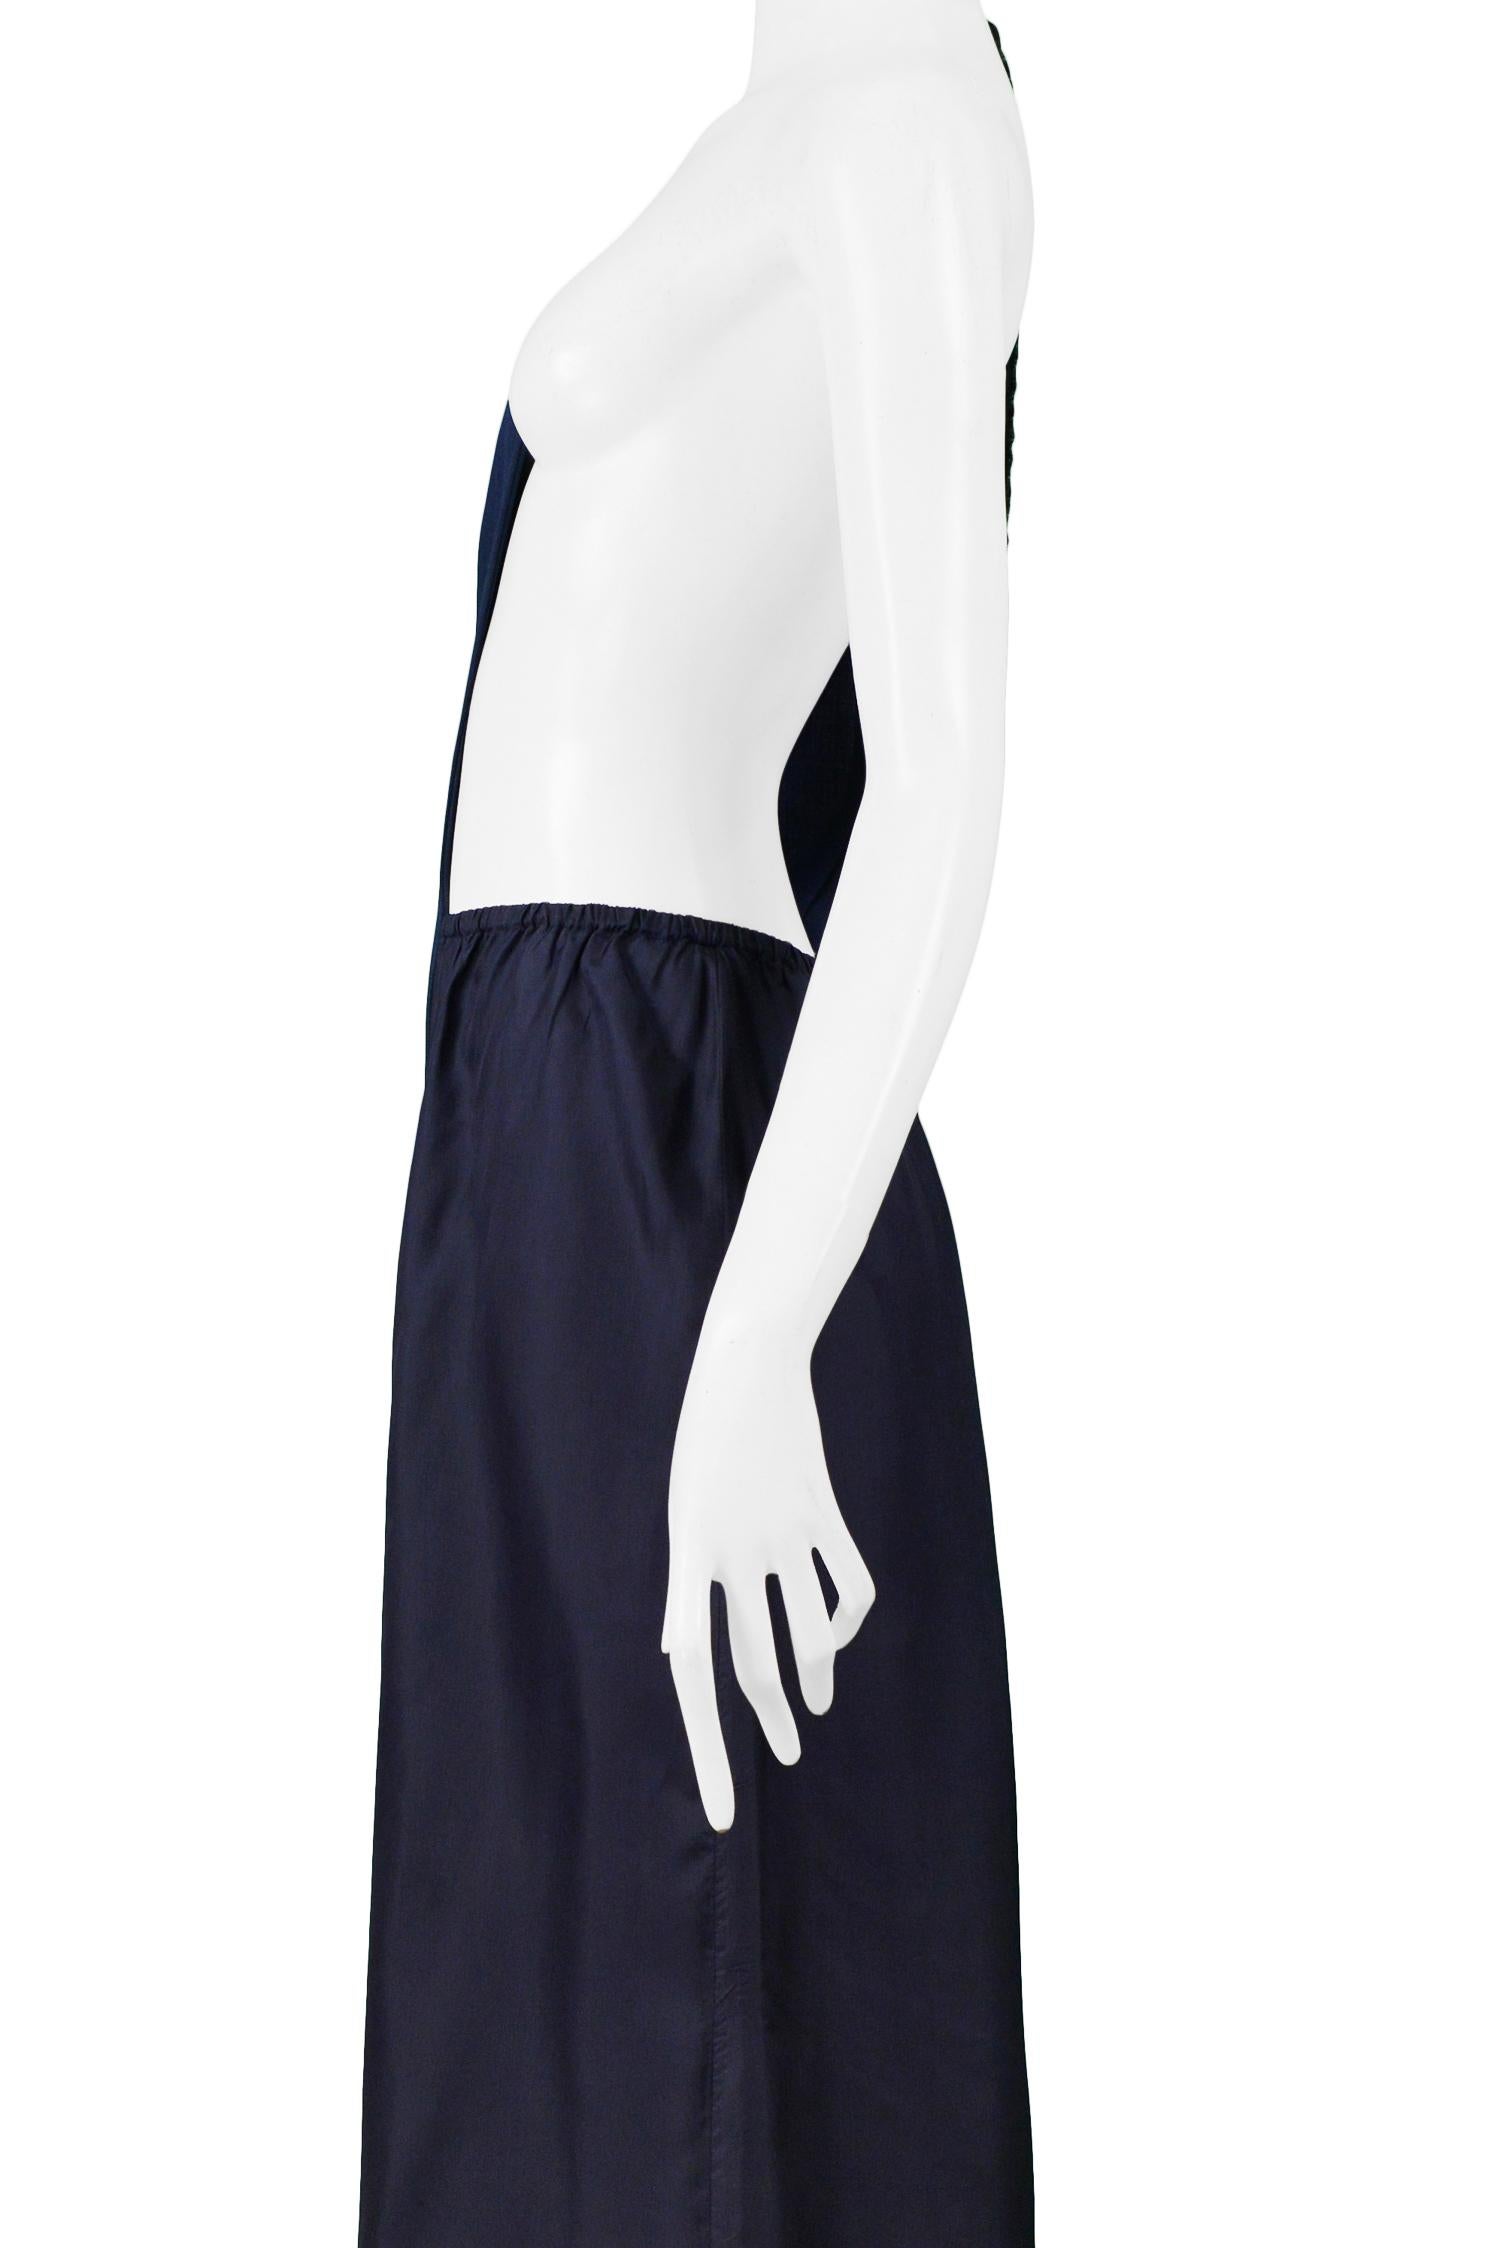 Women's Maison Martin Margiela Blue Asymmetrical Avant Garde Maxi Apron Dress